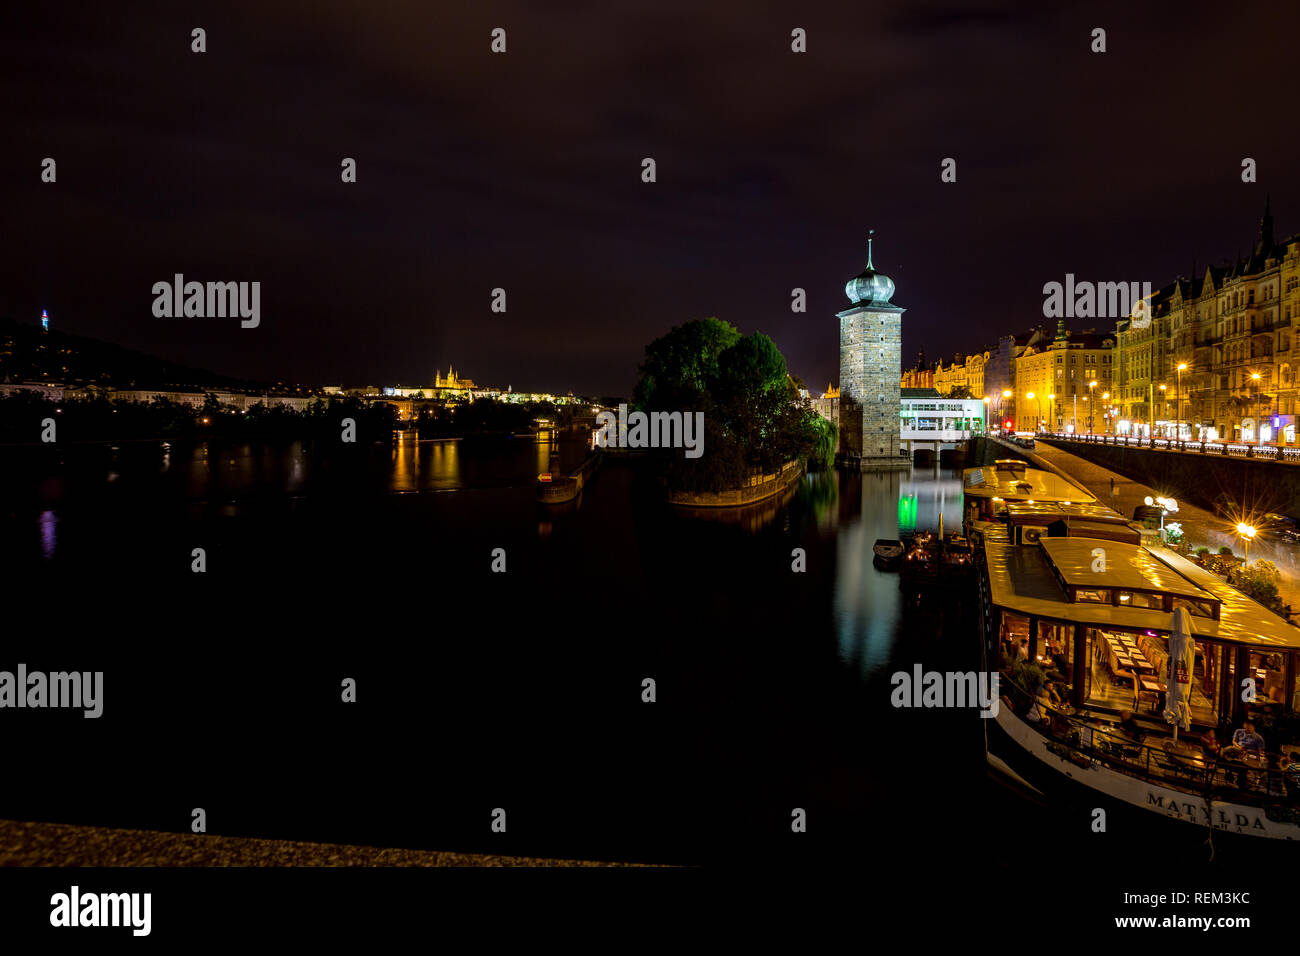 PRAGUE, CZECH REPUBLIC - AUGUST 28, 2015: People eat in floating boat restaurants at night, Vltava river, Prague, capital of Czech Republic in summer. Stock Photo